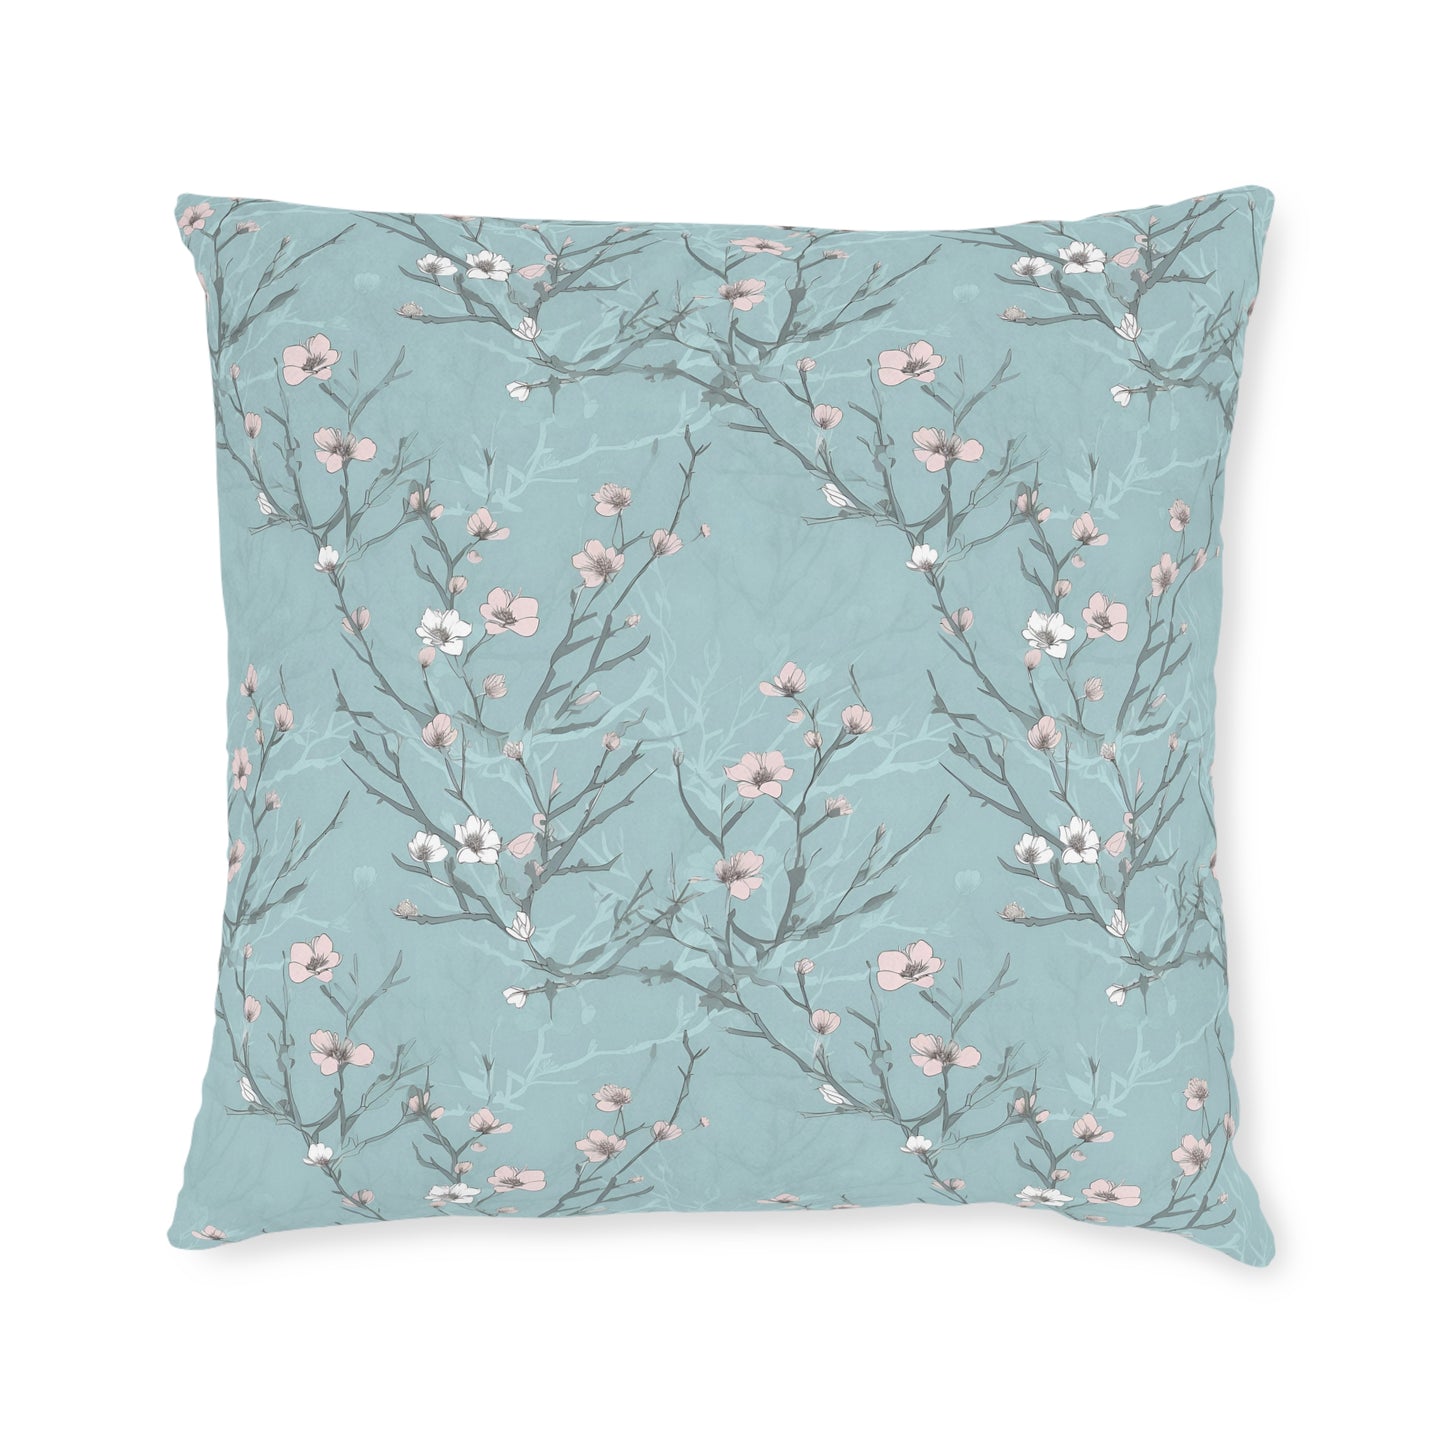 Sakura Serenity - Japanese Cherry Blossom - Sofa and Chair Cushion